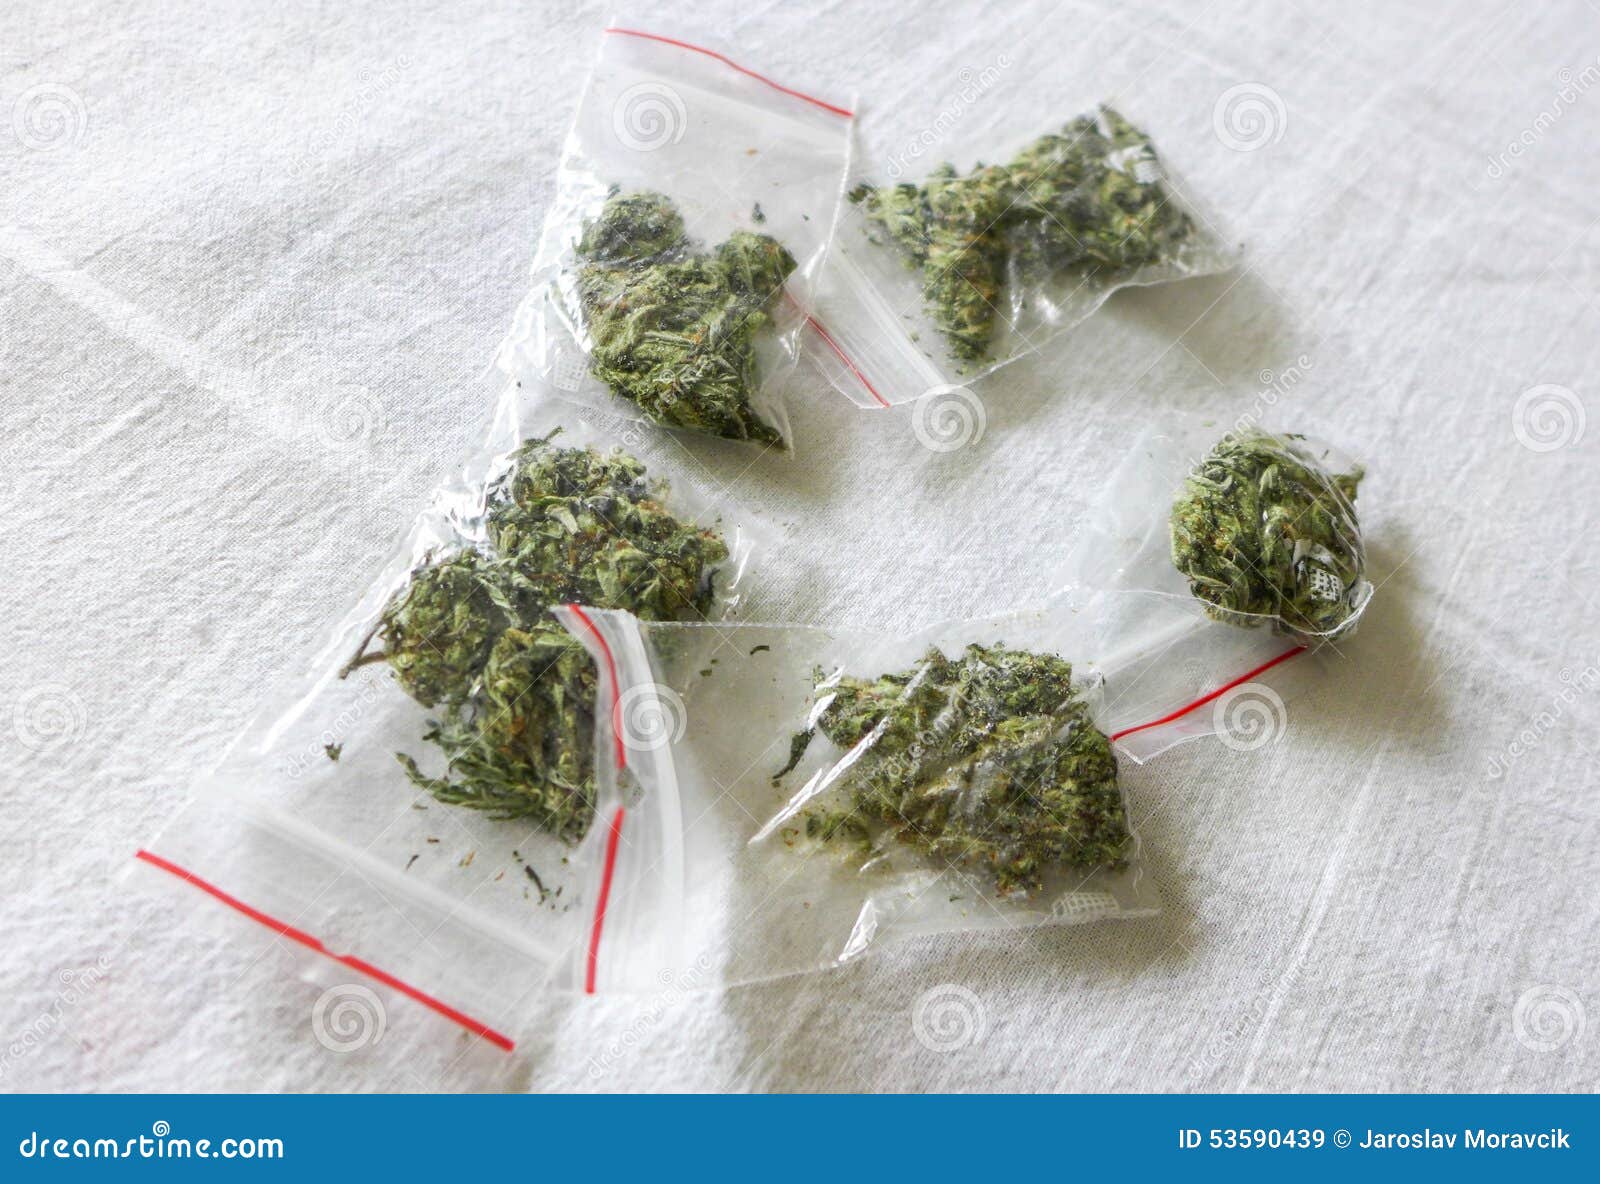 марихуана в пакетах